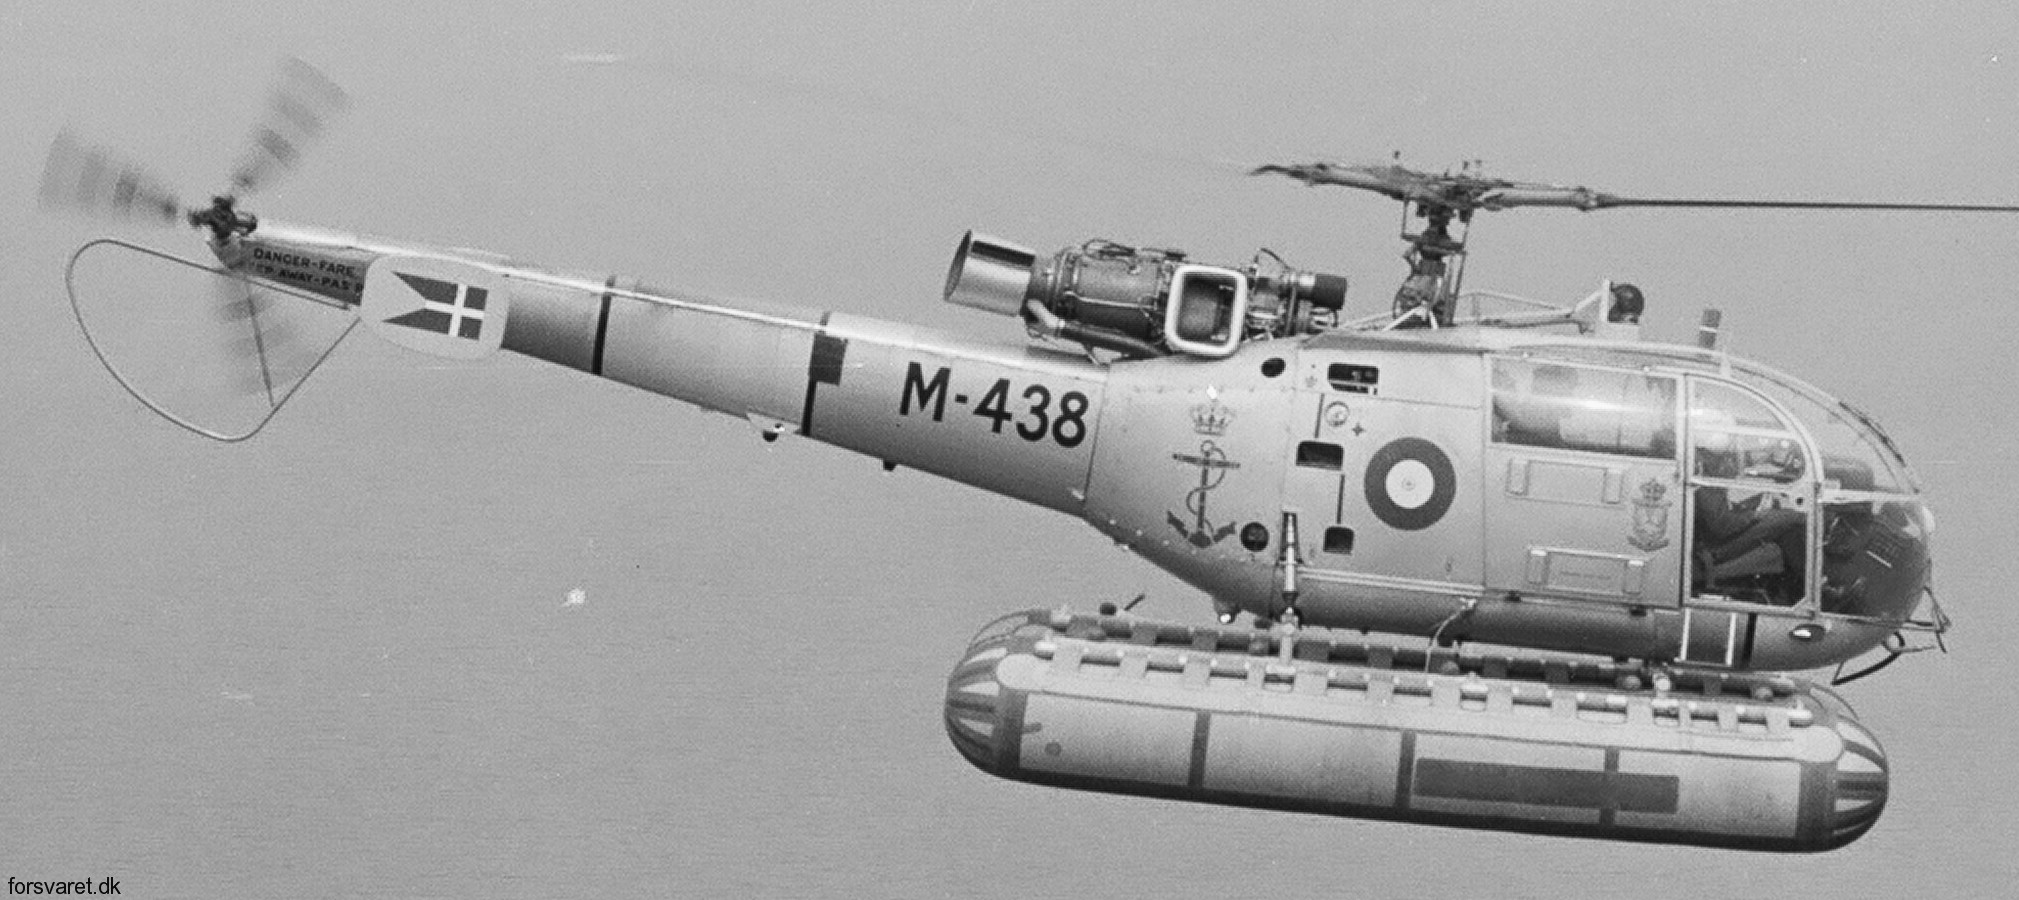 sa 316b alouette iii helicopter royal danish navy søværnet kongelige danske marine sud aviation m-438 03